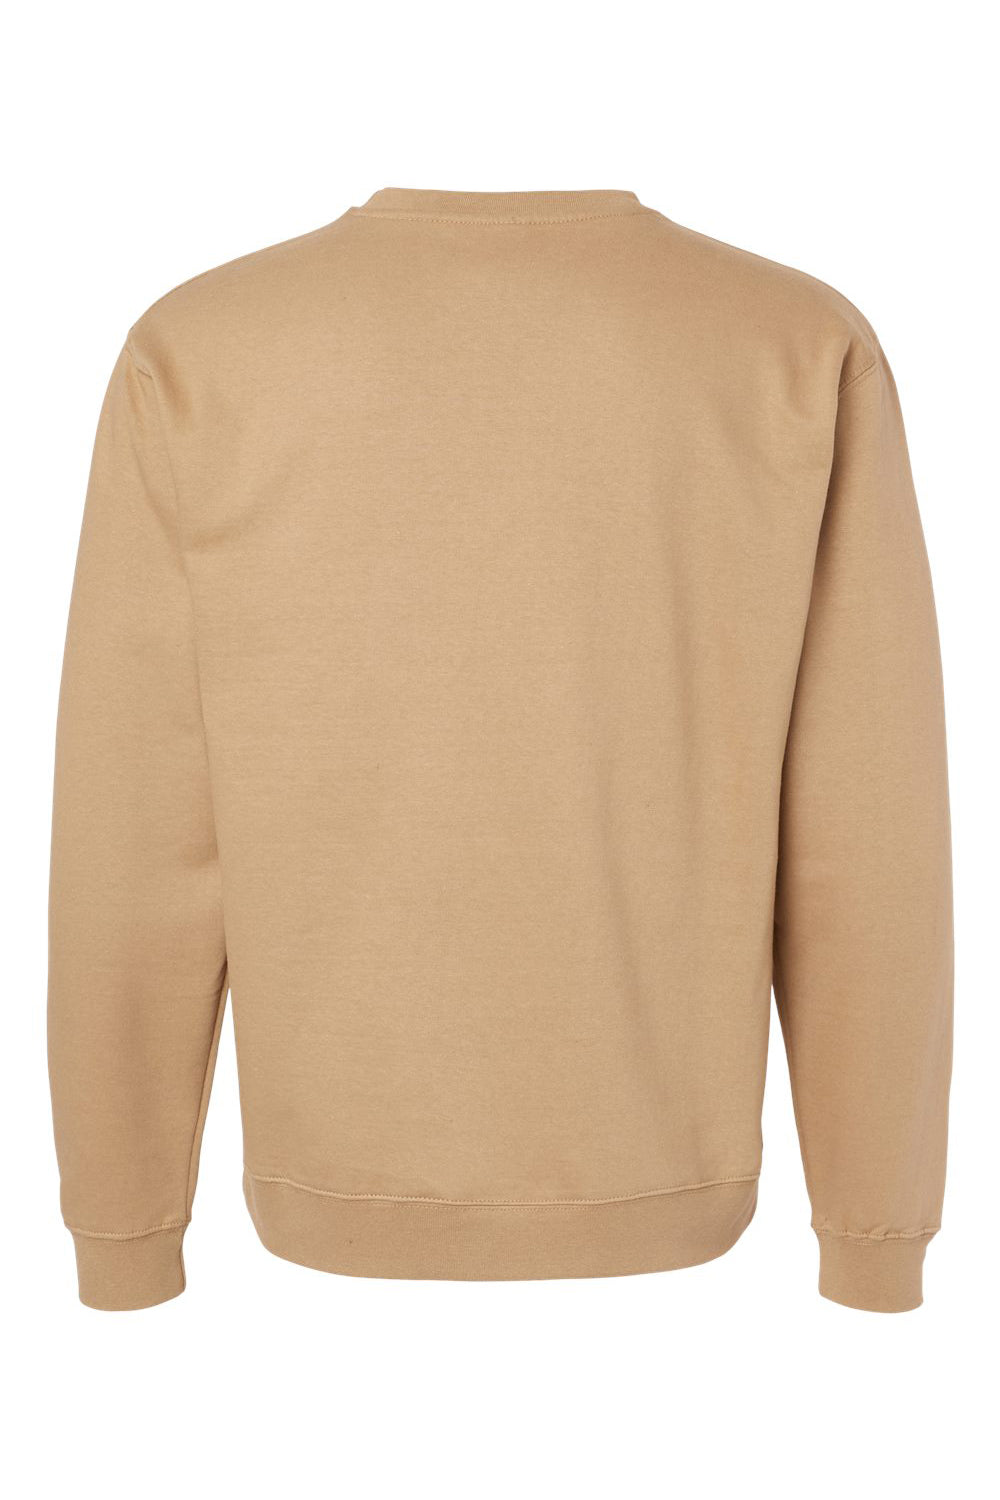 Independent Trading Co. SS3000 Mens Crewneck Sweatshirt Sandstone Brown Flat Back